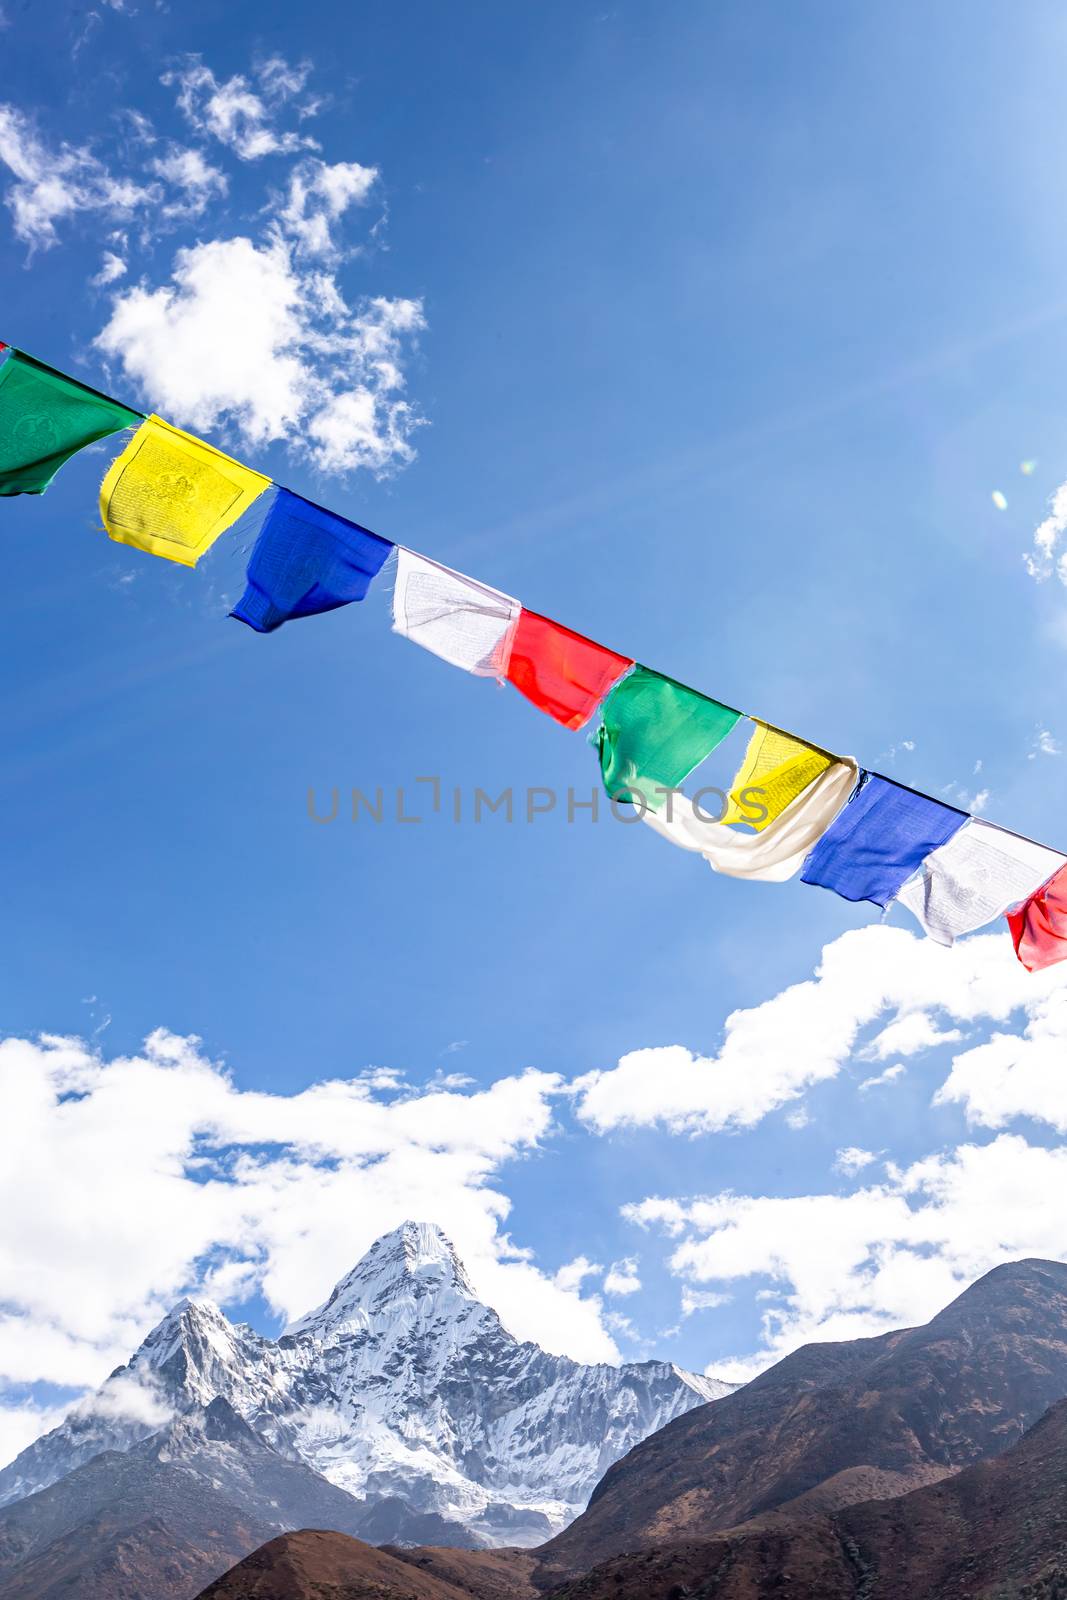 Ama Dablam Mountain. Trekking Everest Base Camp. Nepal. by SeuMelhorClick